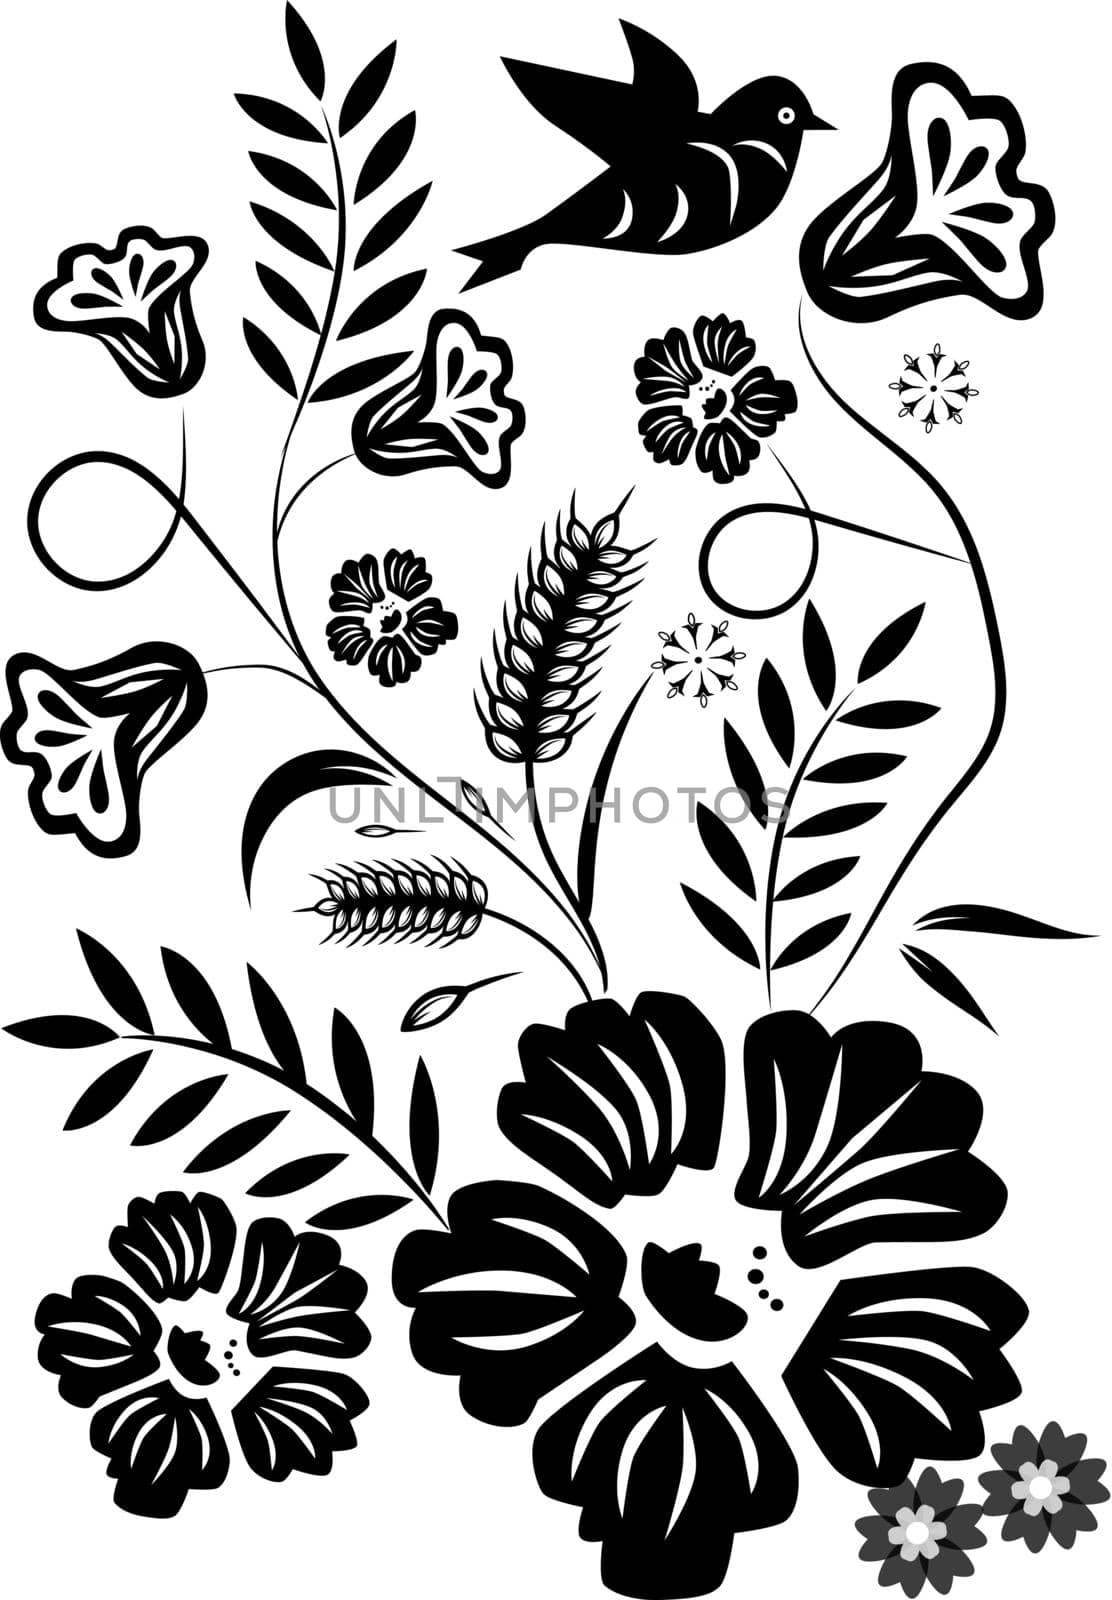 Abstract flower graphic design. by biruzza